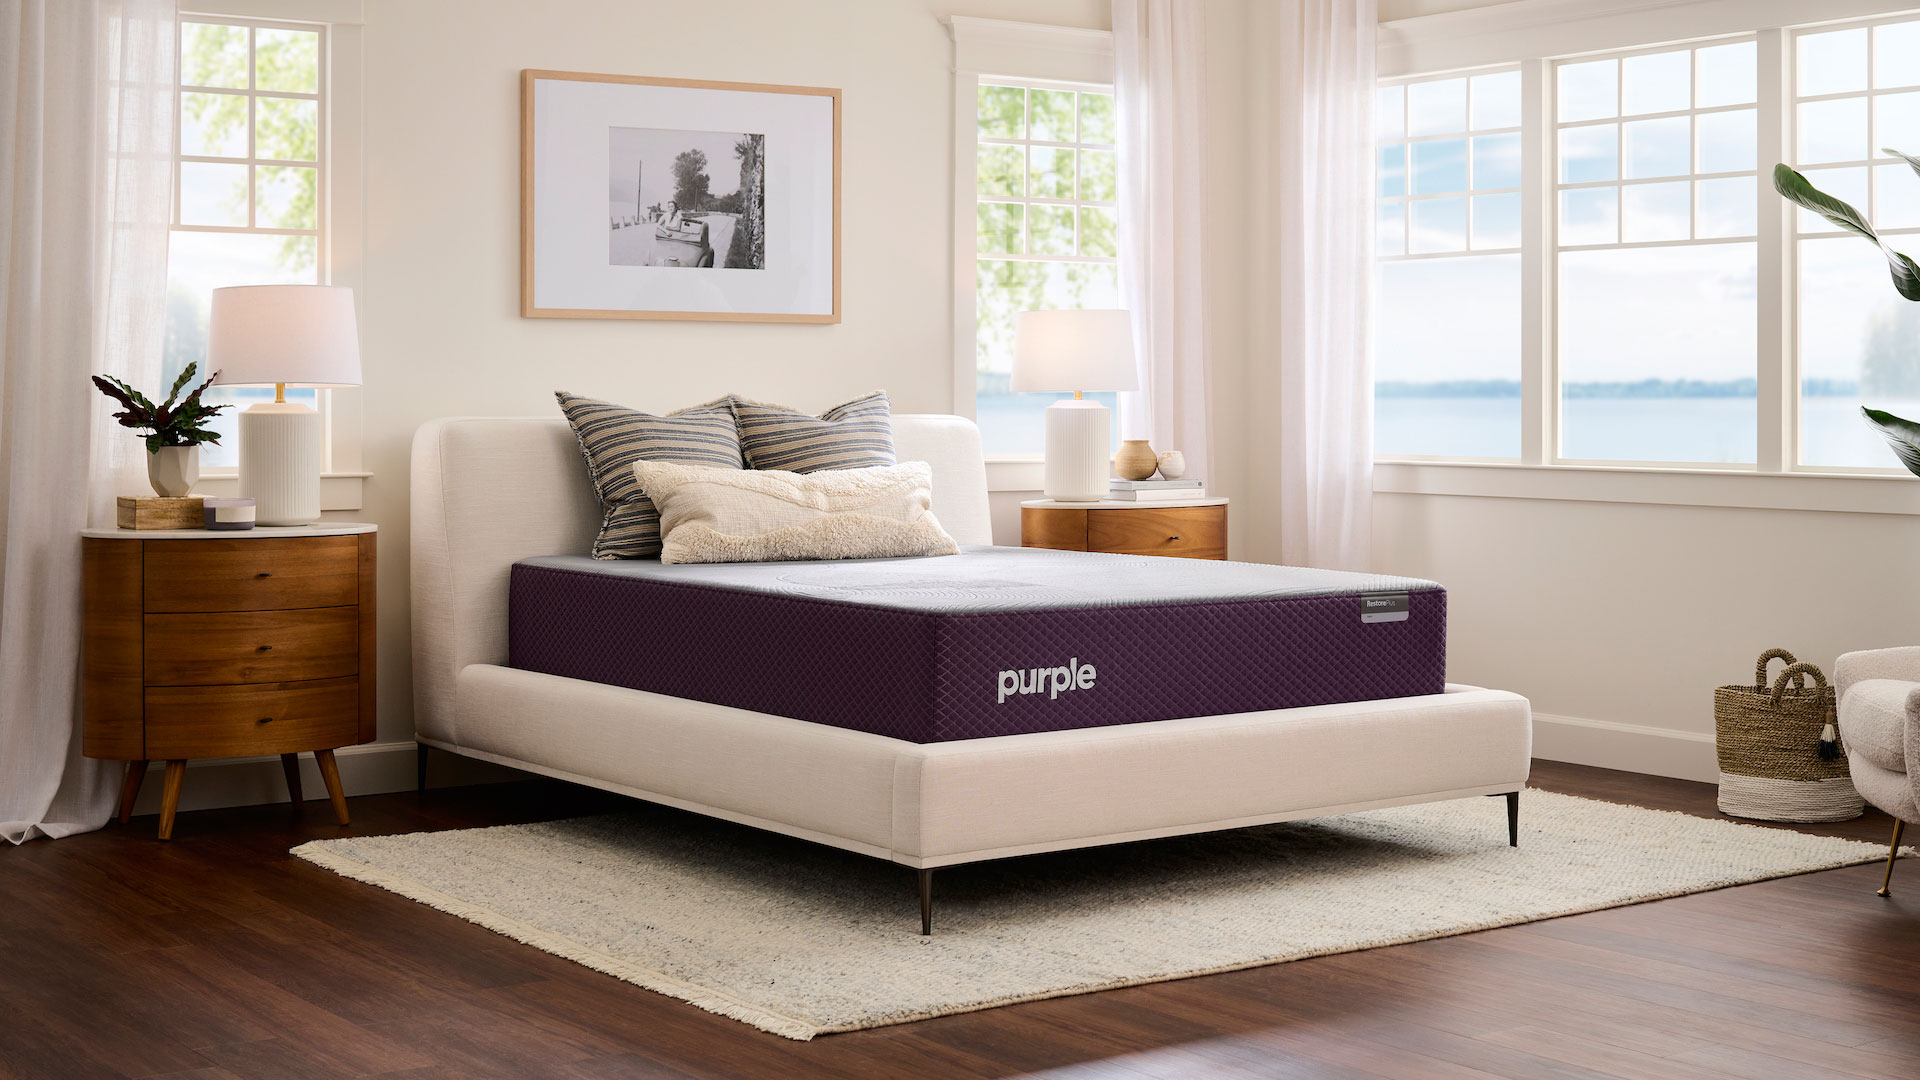 Purple RestorePlus mattress in a bedroom